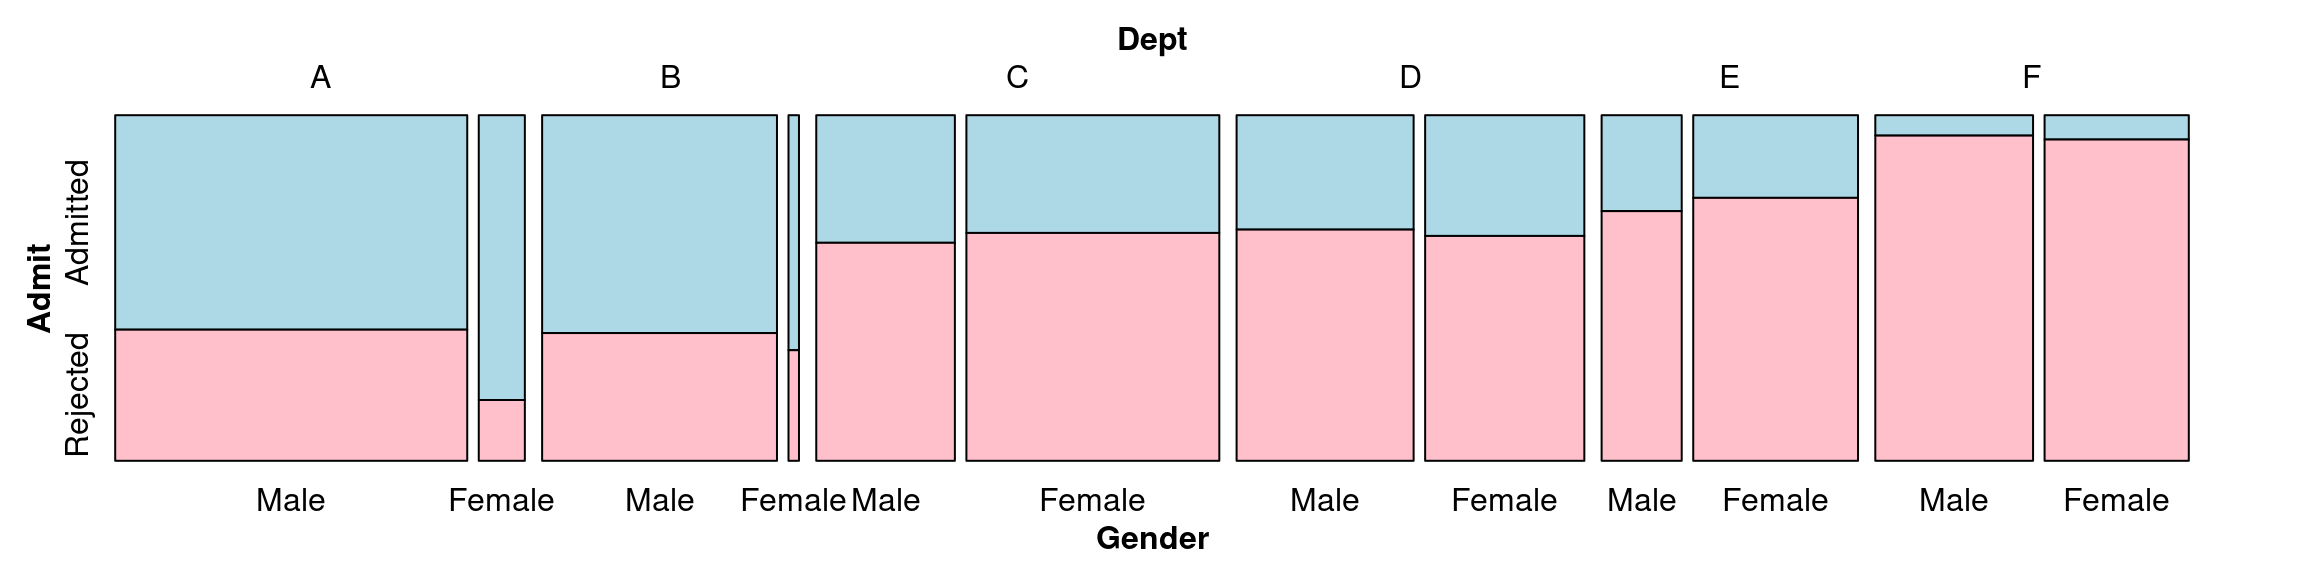 Splitting Dept vertically, Gender vertically, and Admit horizontally